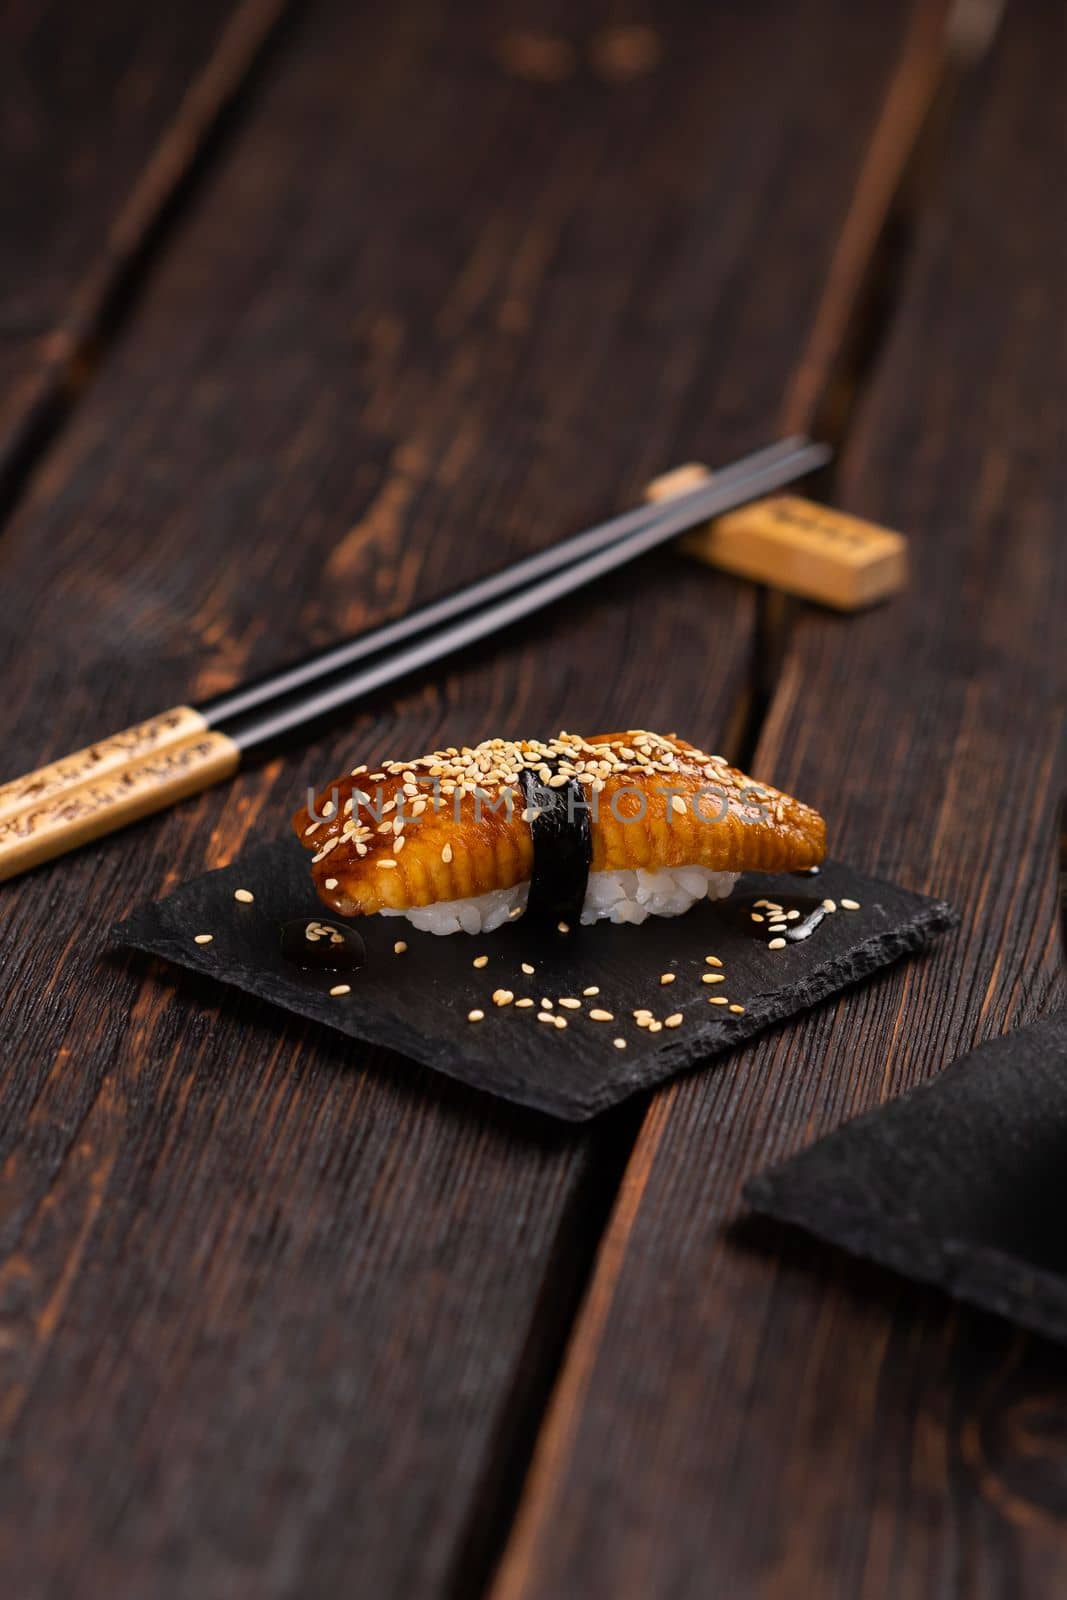 Japanese sushi unagi nigiri sushi eel on wooden background.